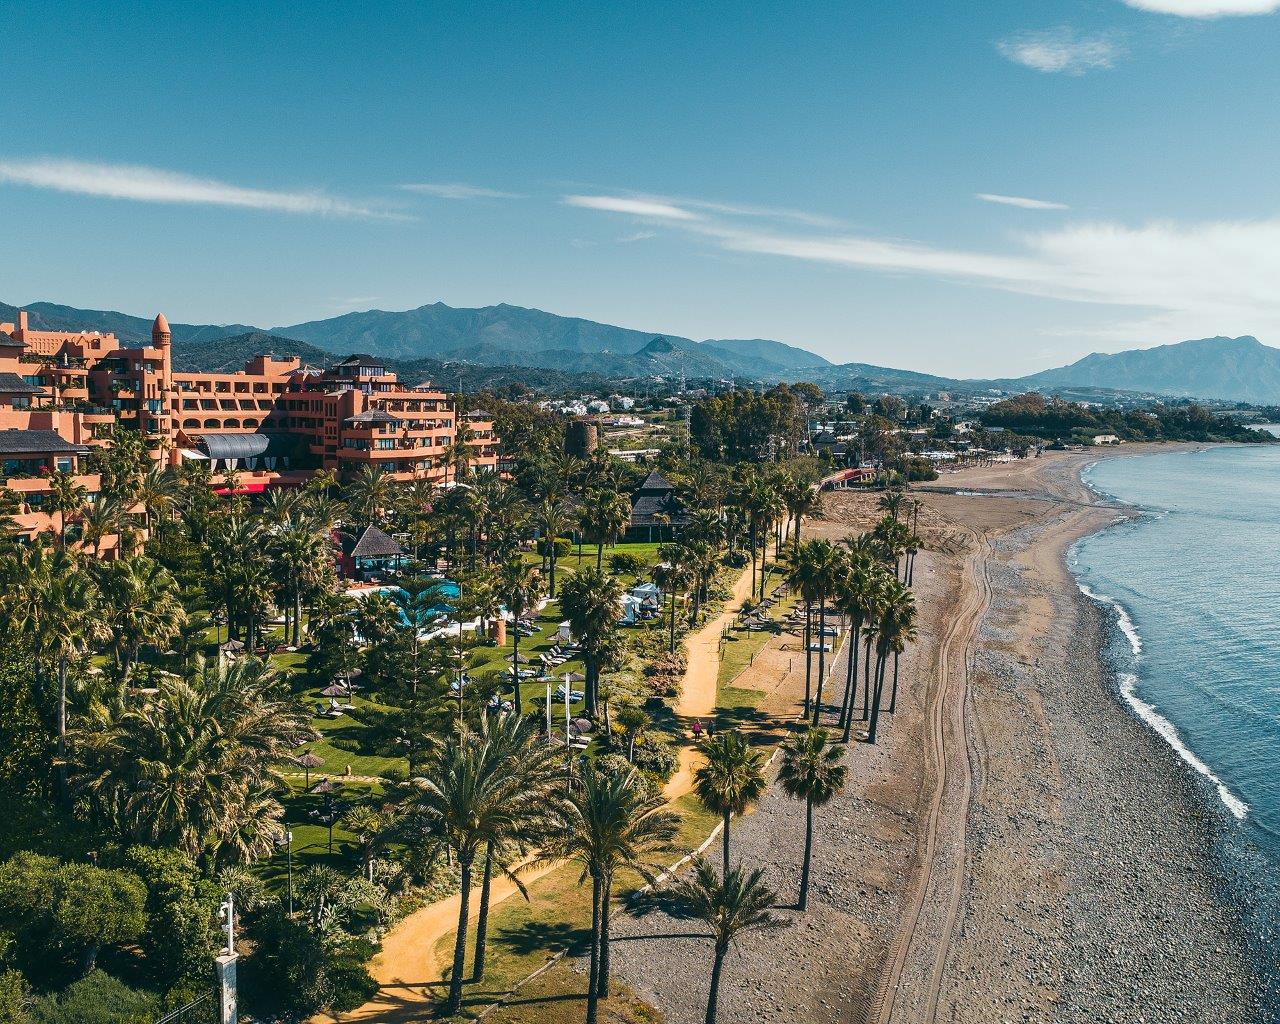 Destination Andalusia – My Kempinski Experience at the Hotel Bahia